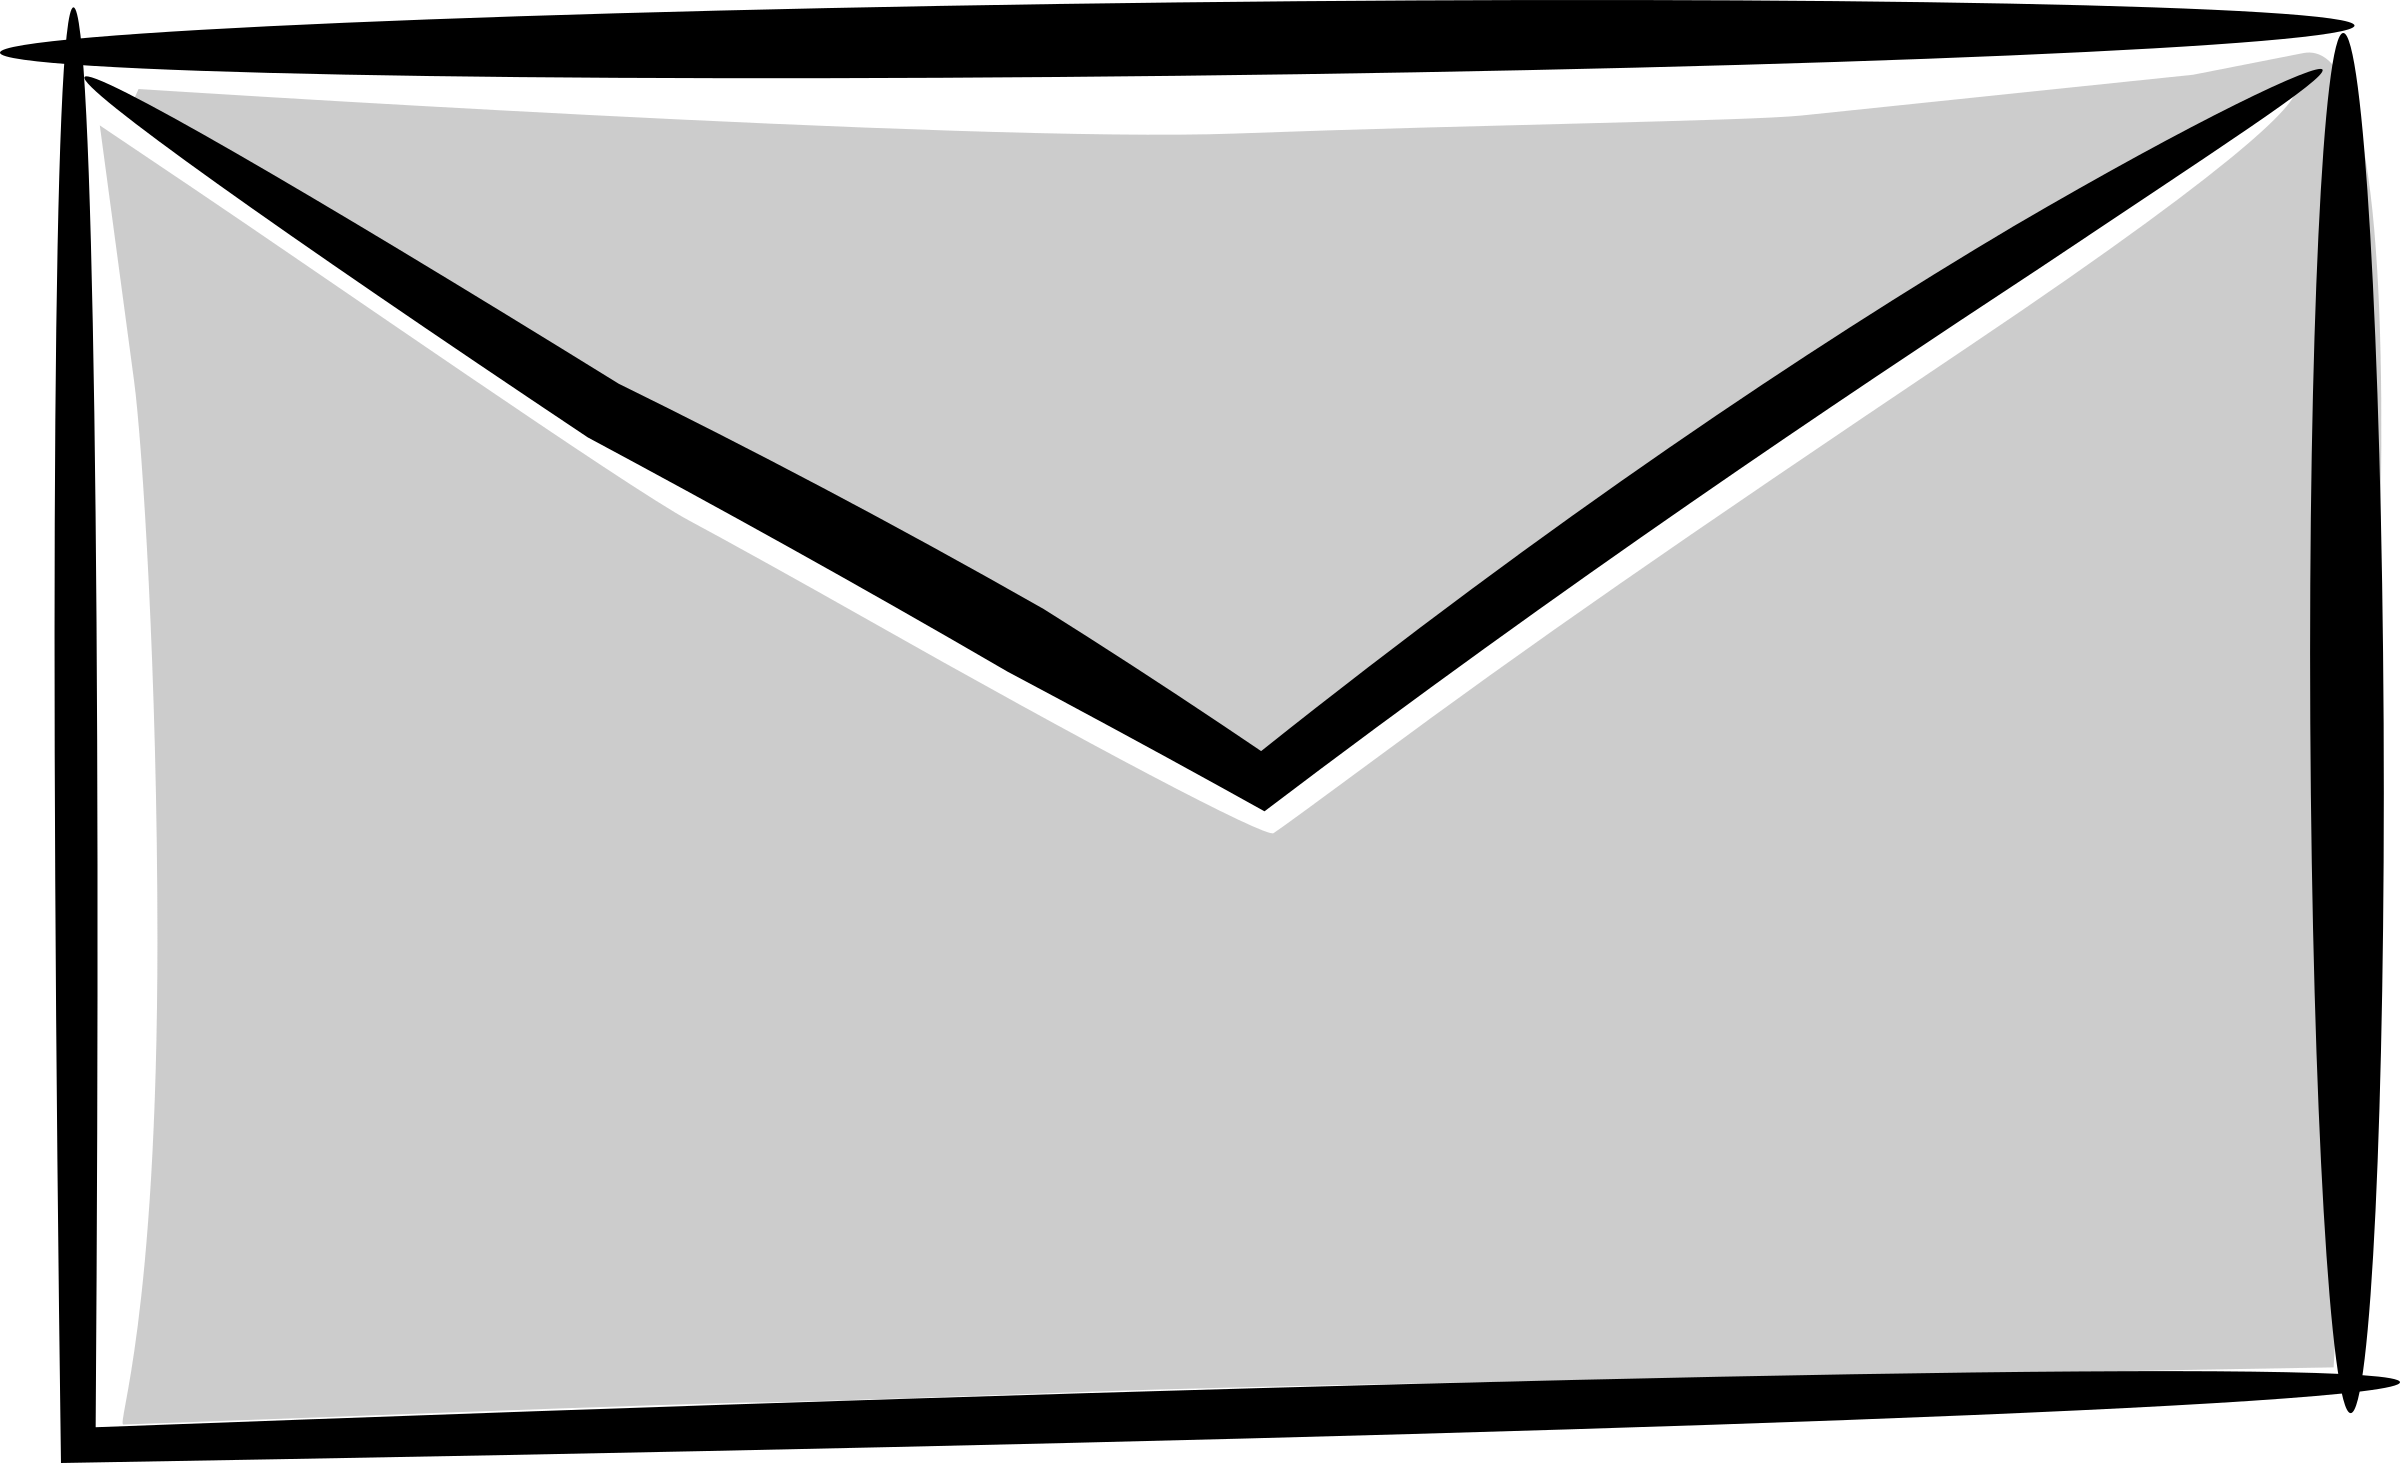 Sending Viruses Image Result For Envelope Cartoon - Envelope .png (2400x1463)